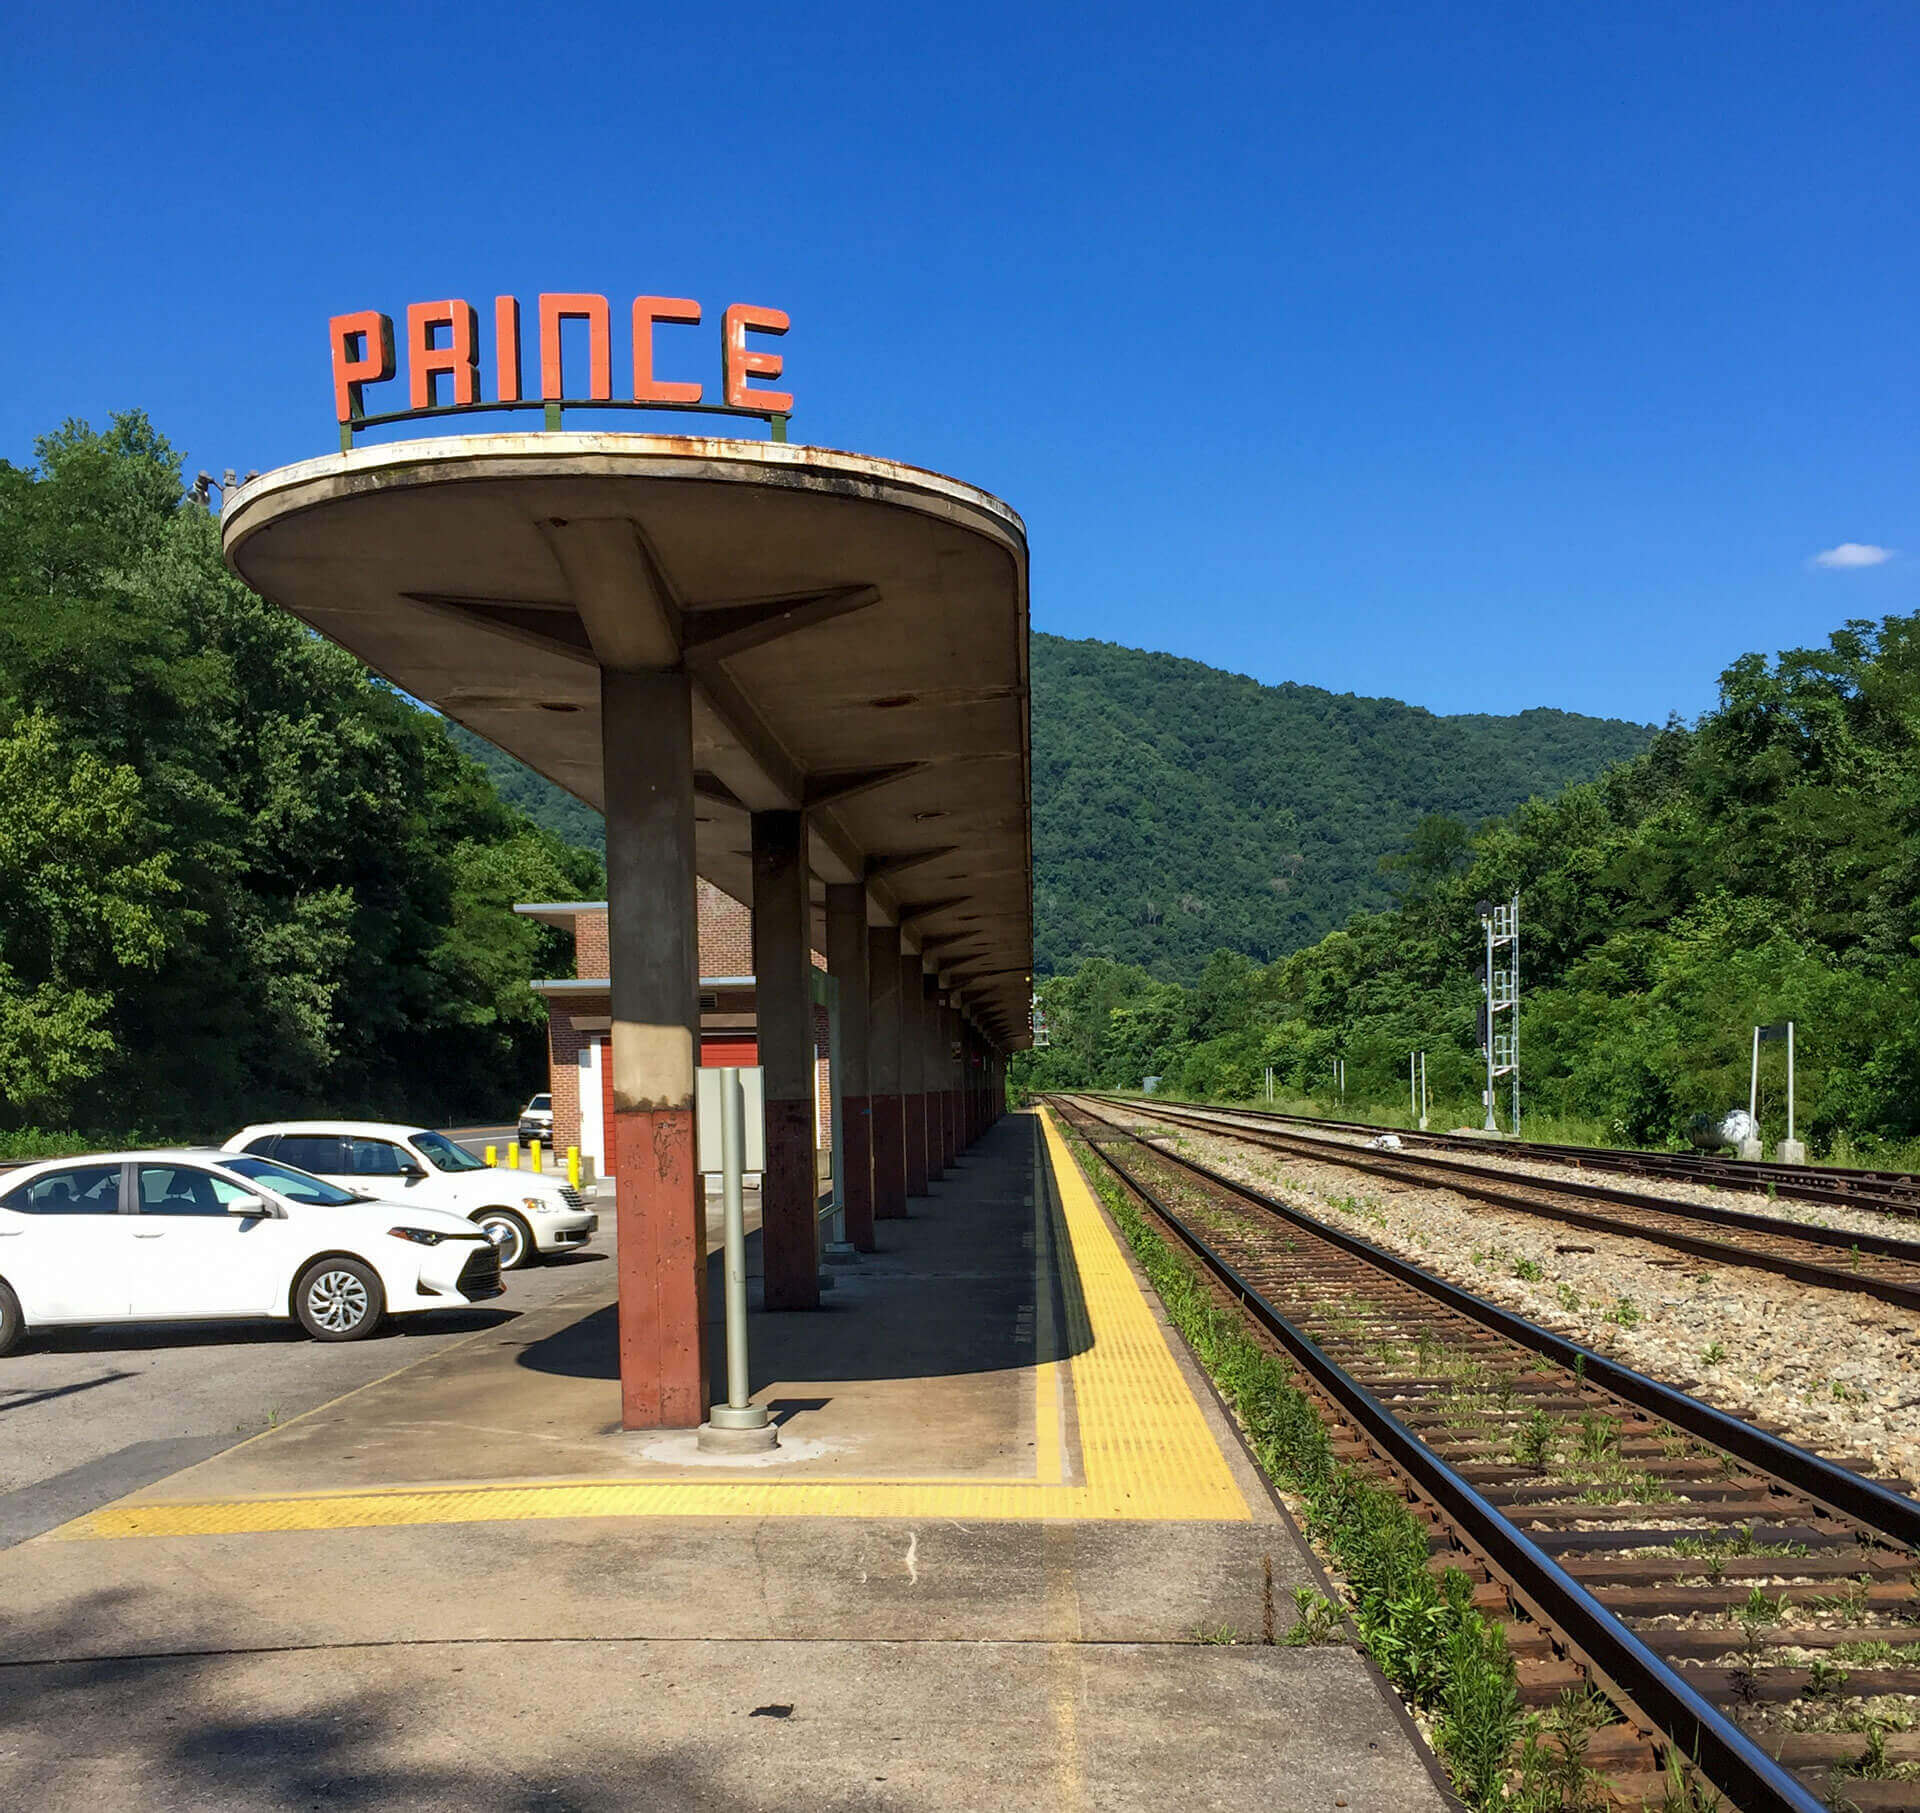 Prince Train Depot